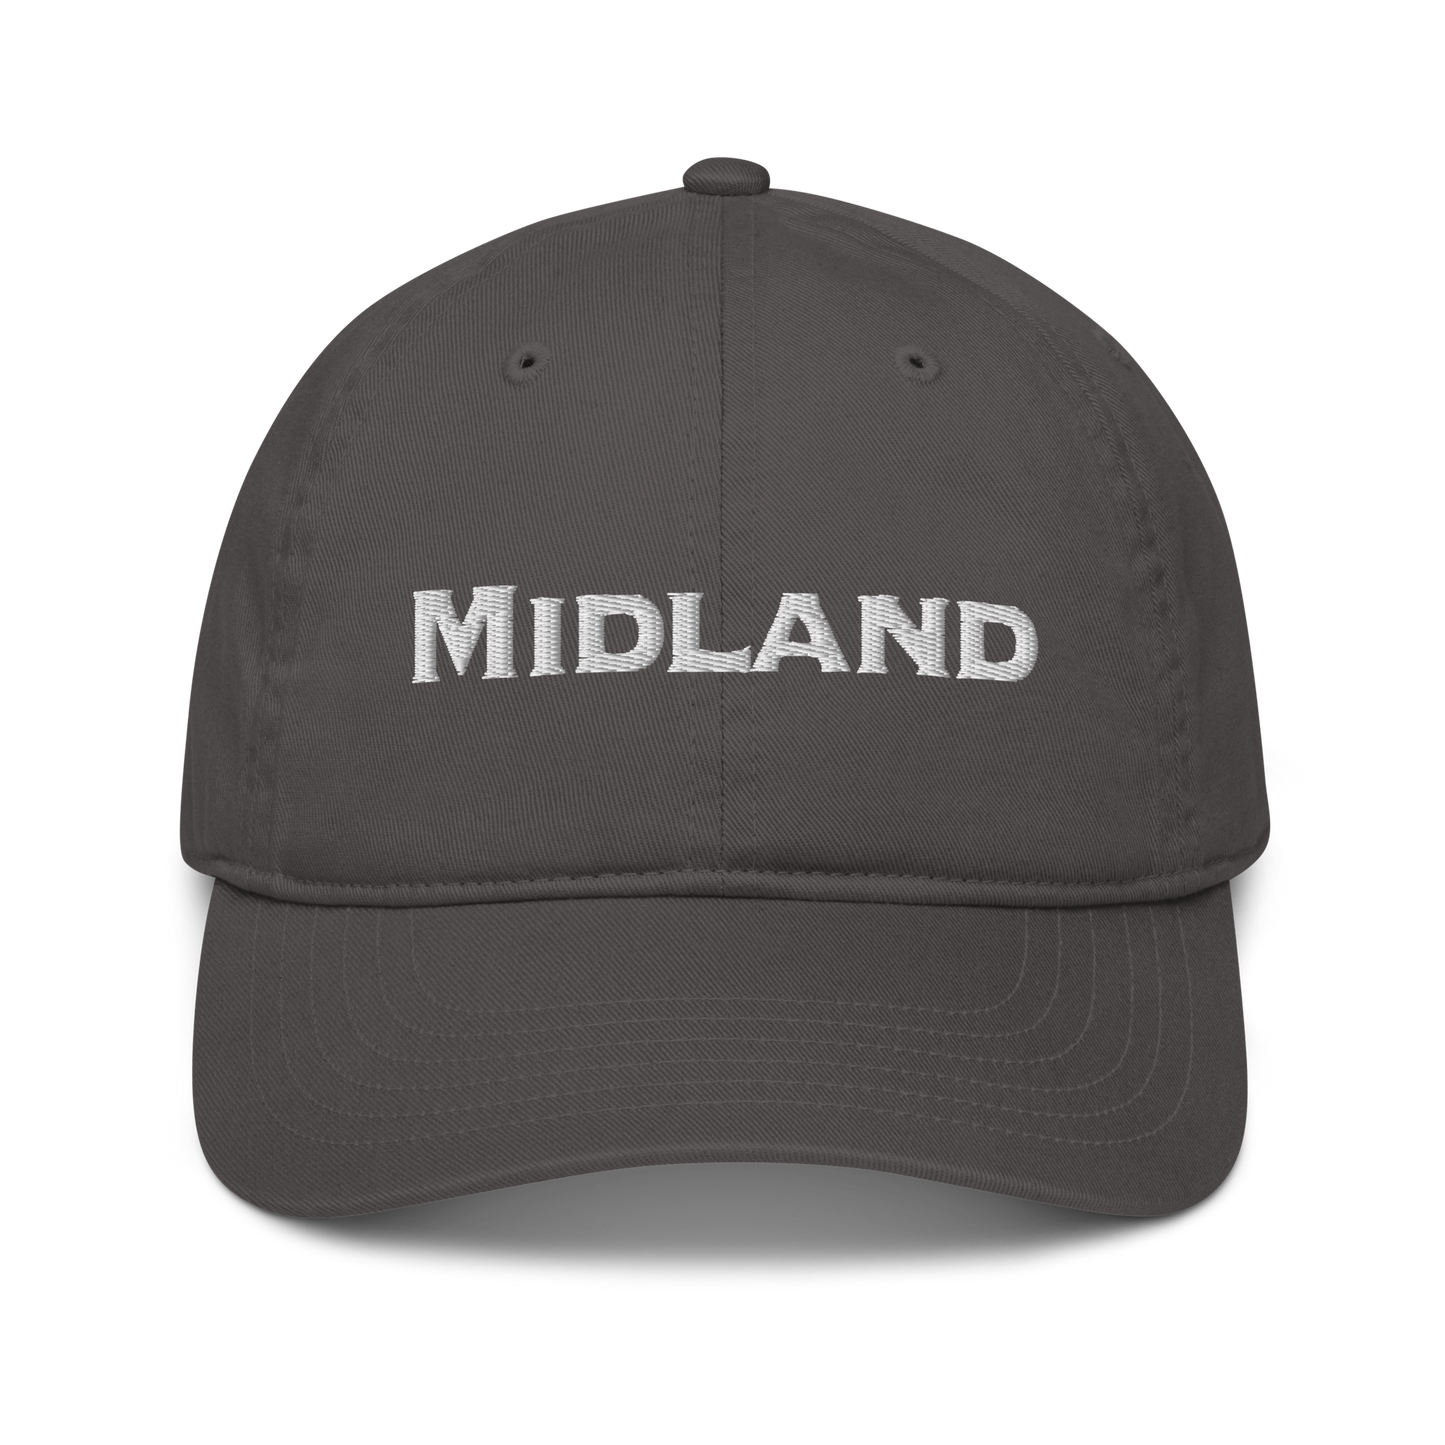 'Midland' Classic Baseball Cap | White/Black Embroidery